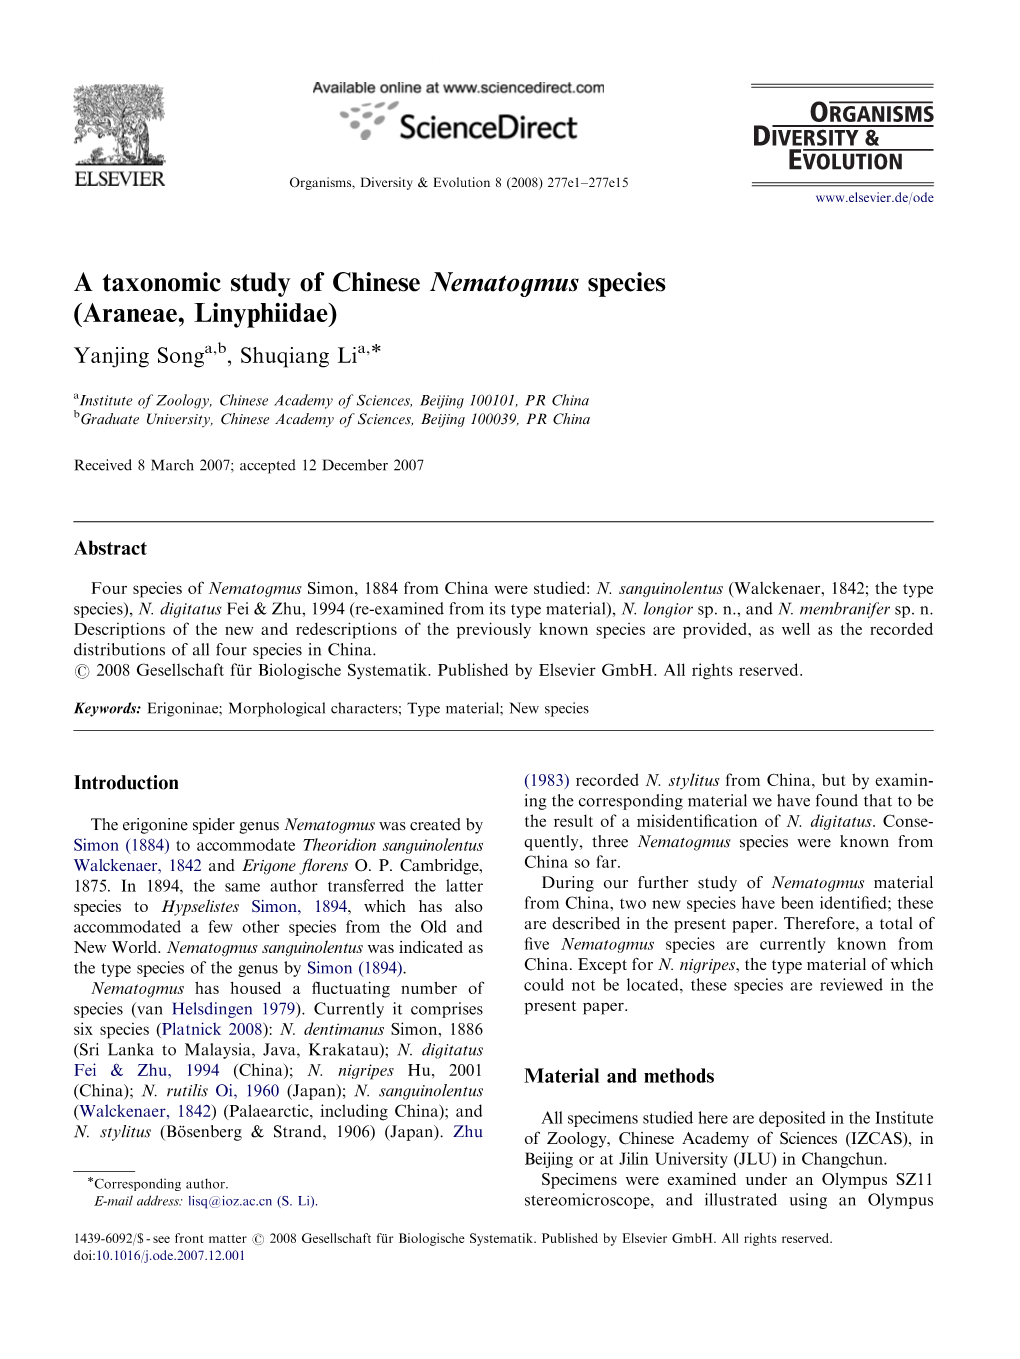 A Taxonomic Study of Chinese Nematogmus Species